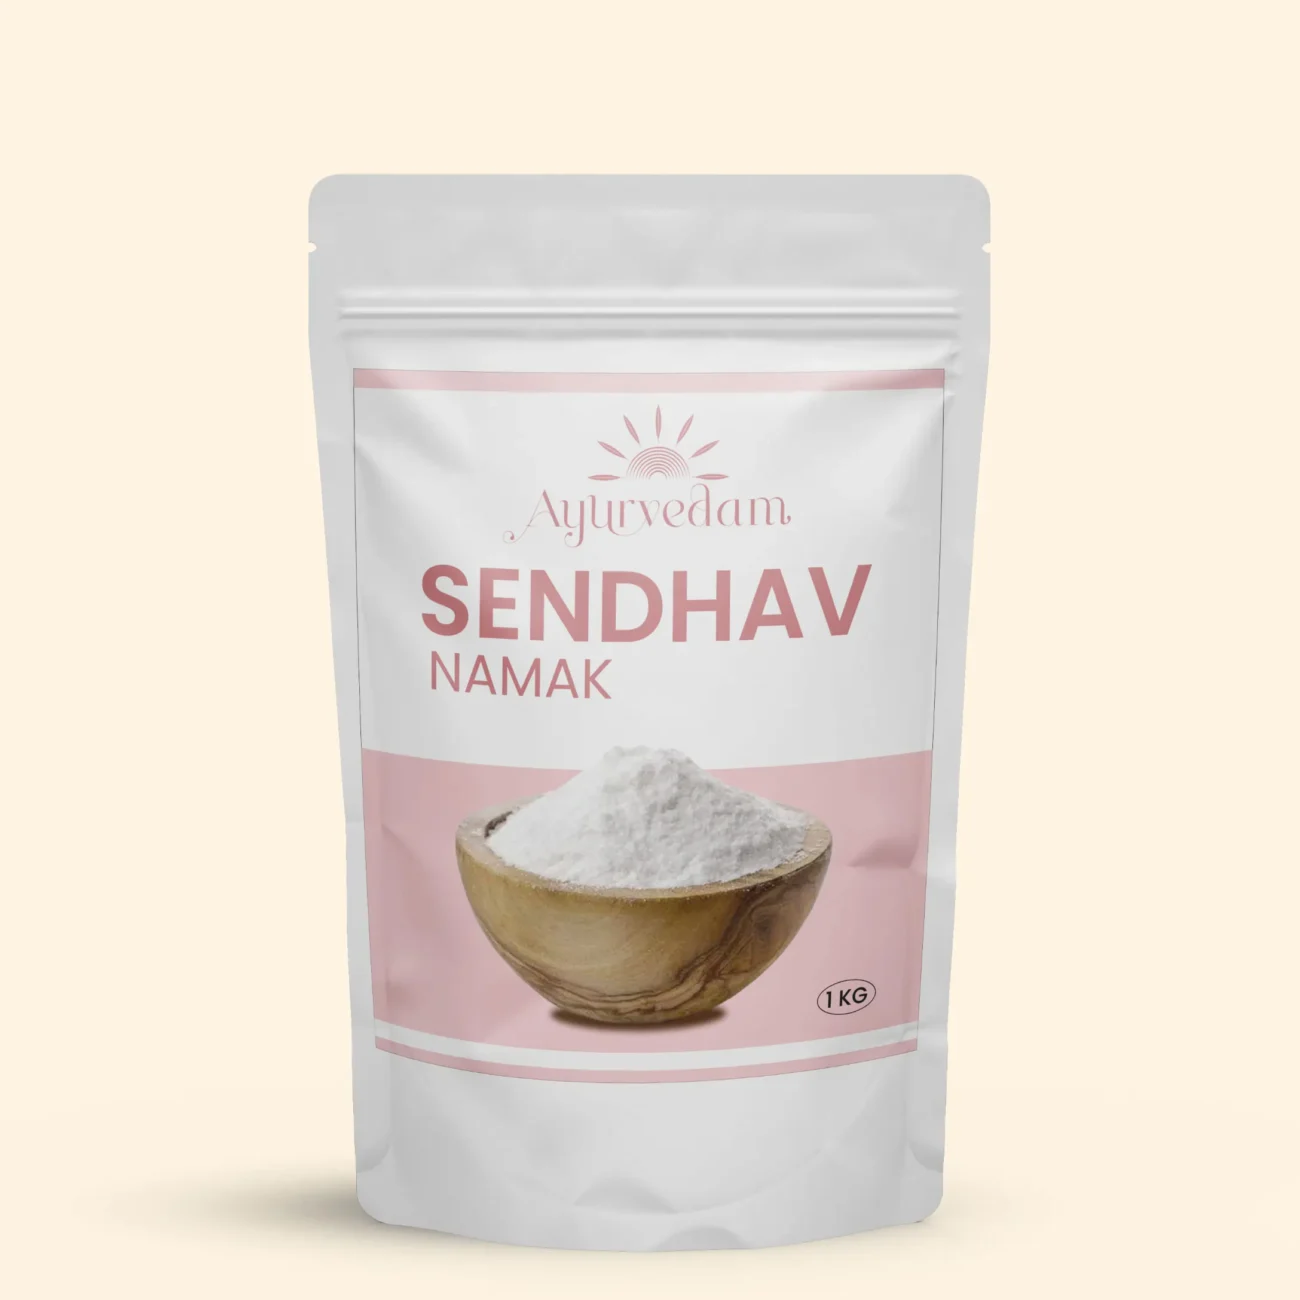 A Packet of Sendhav Namak by Ayurvedam